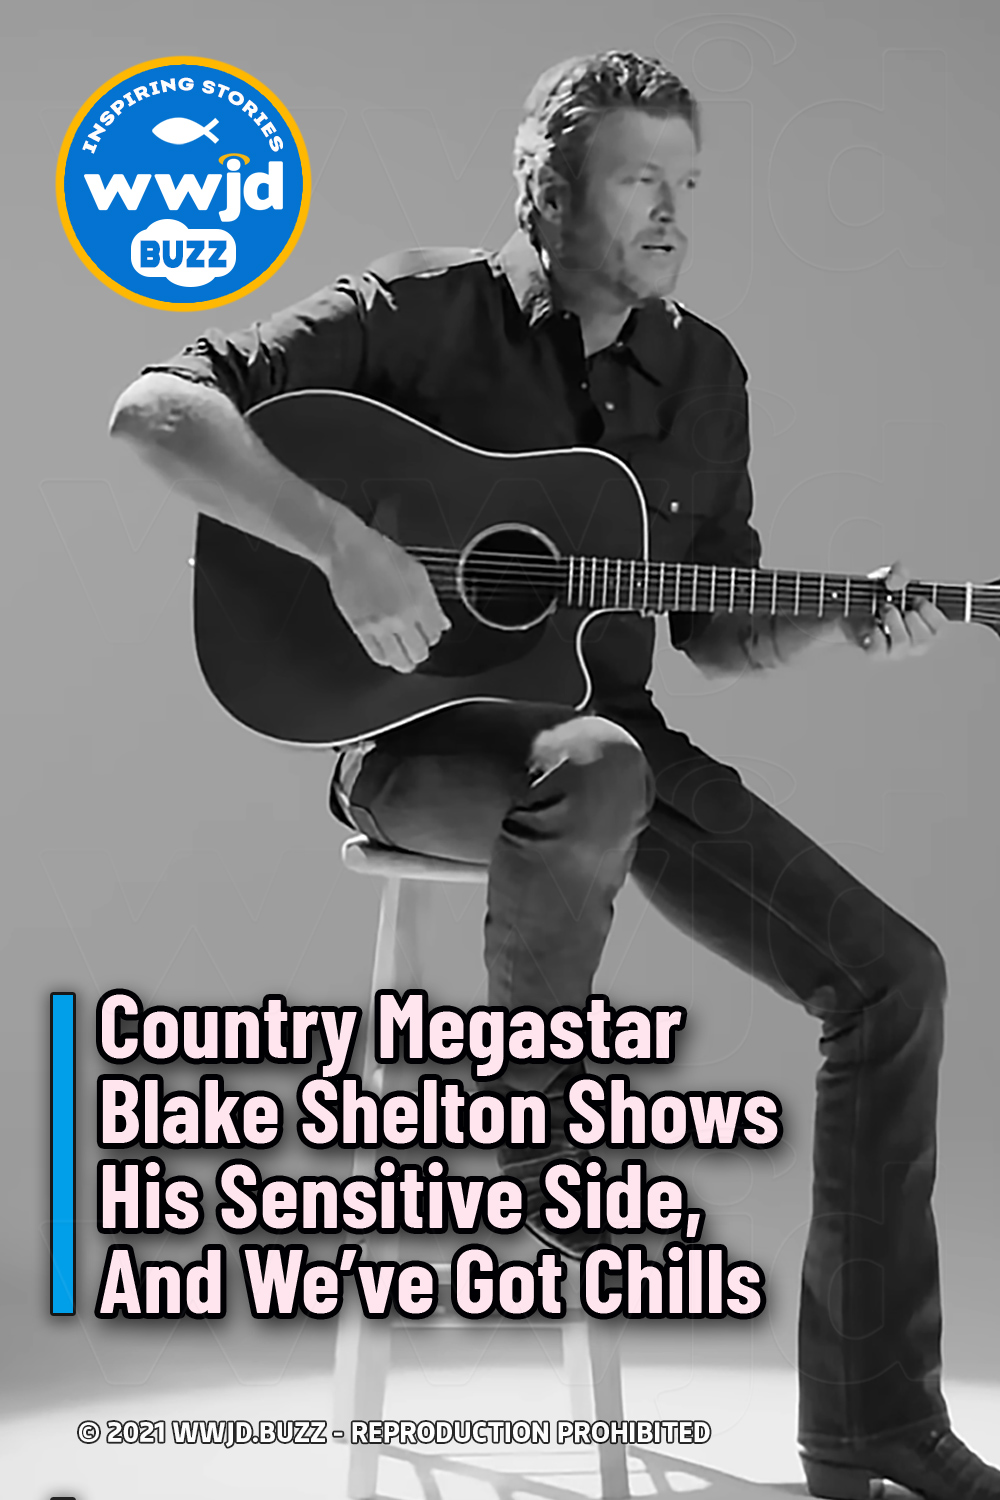 Country Megastar Blake Shelton Shows His Sensitive Side, And We’ve Got Chills